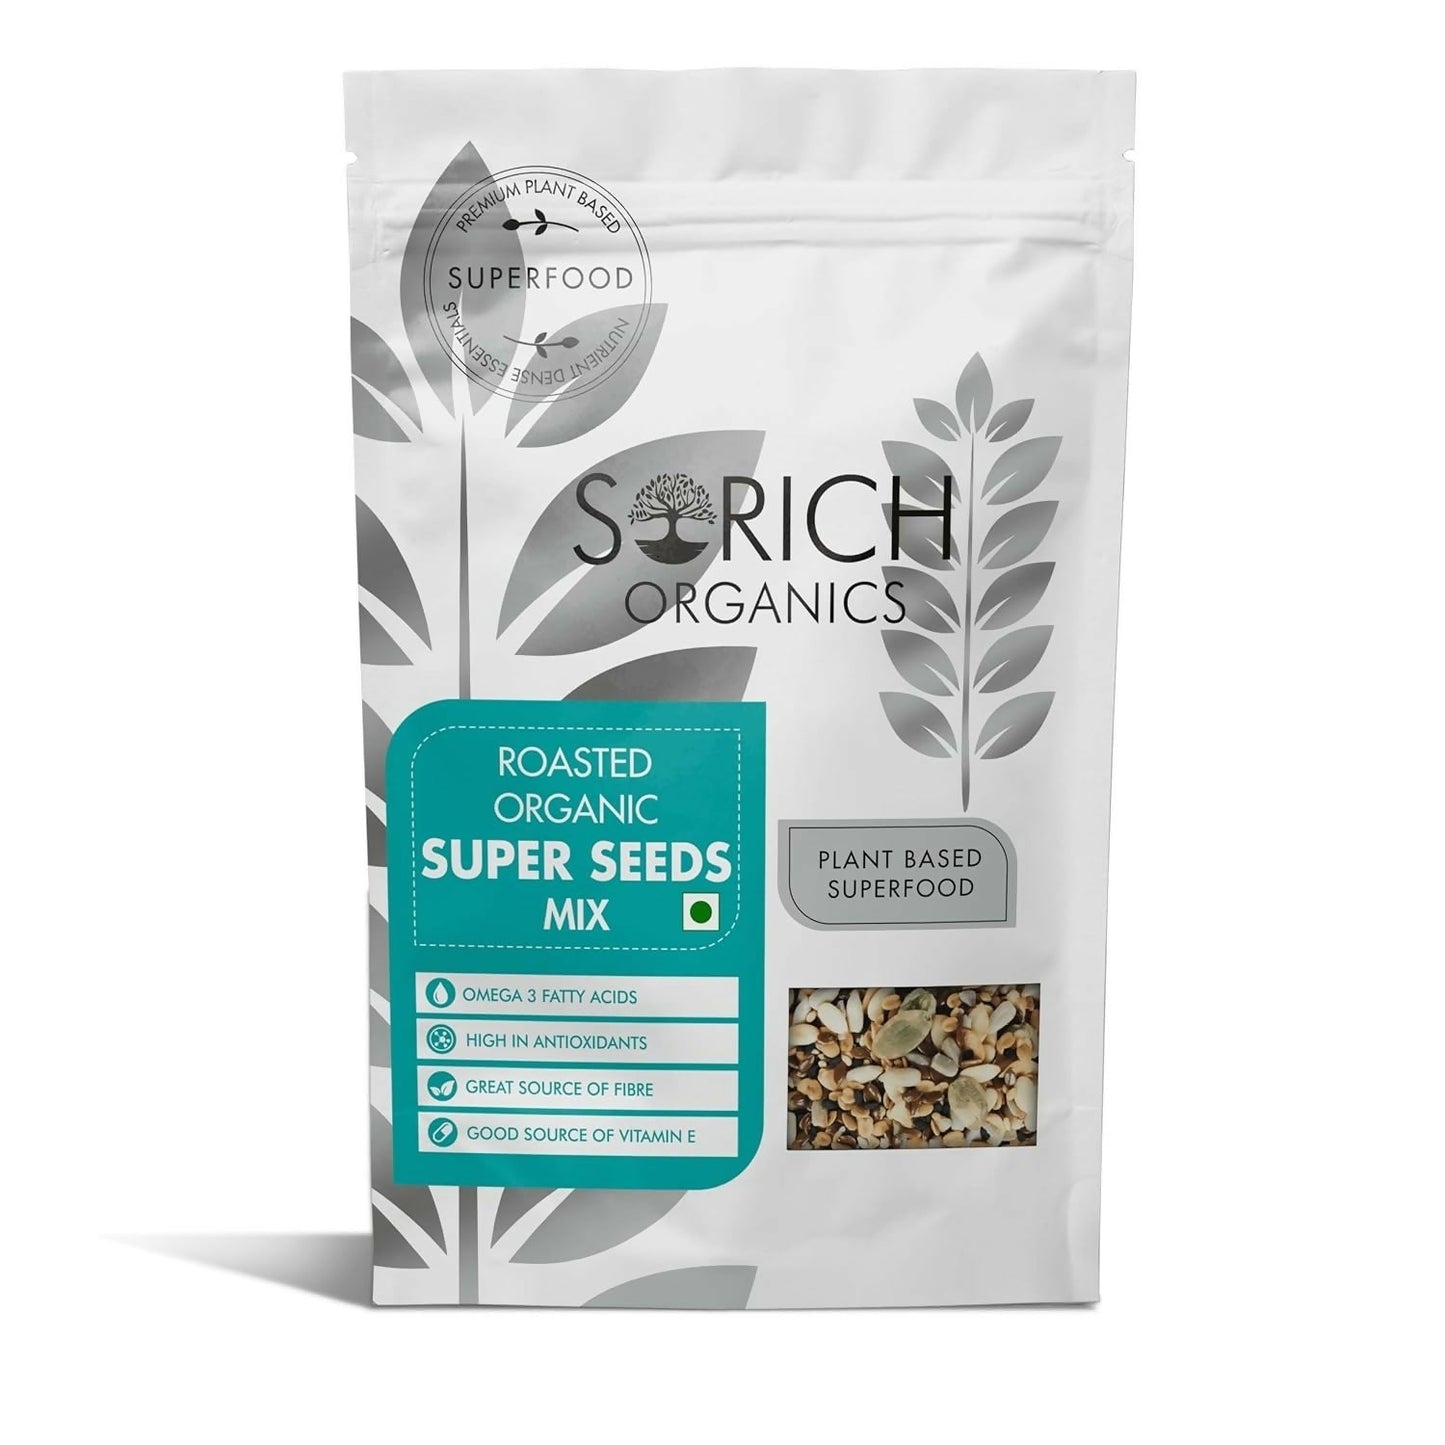 Sorich Organics Roasted Super Seed Mix - BUDNE